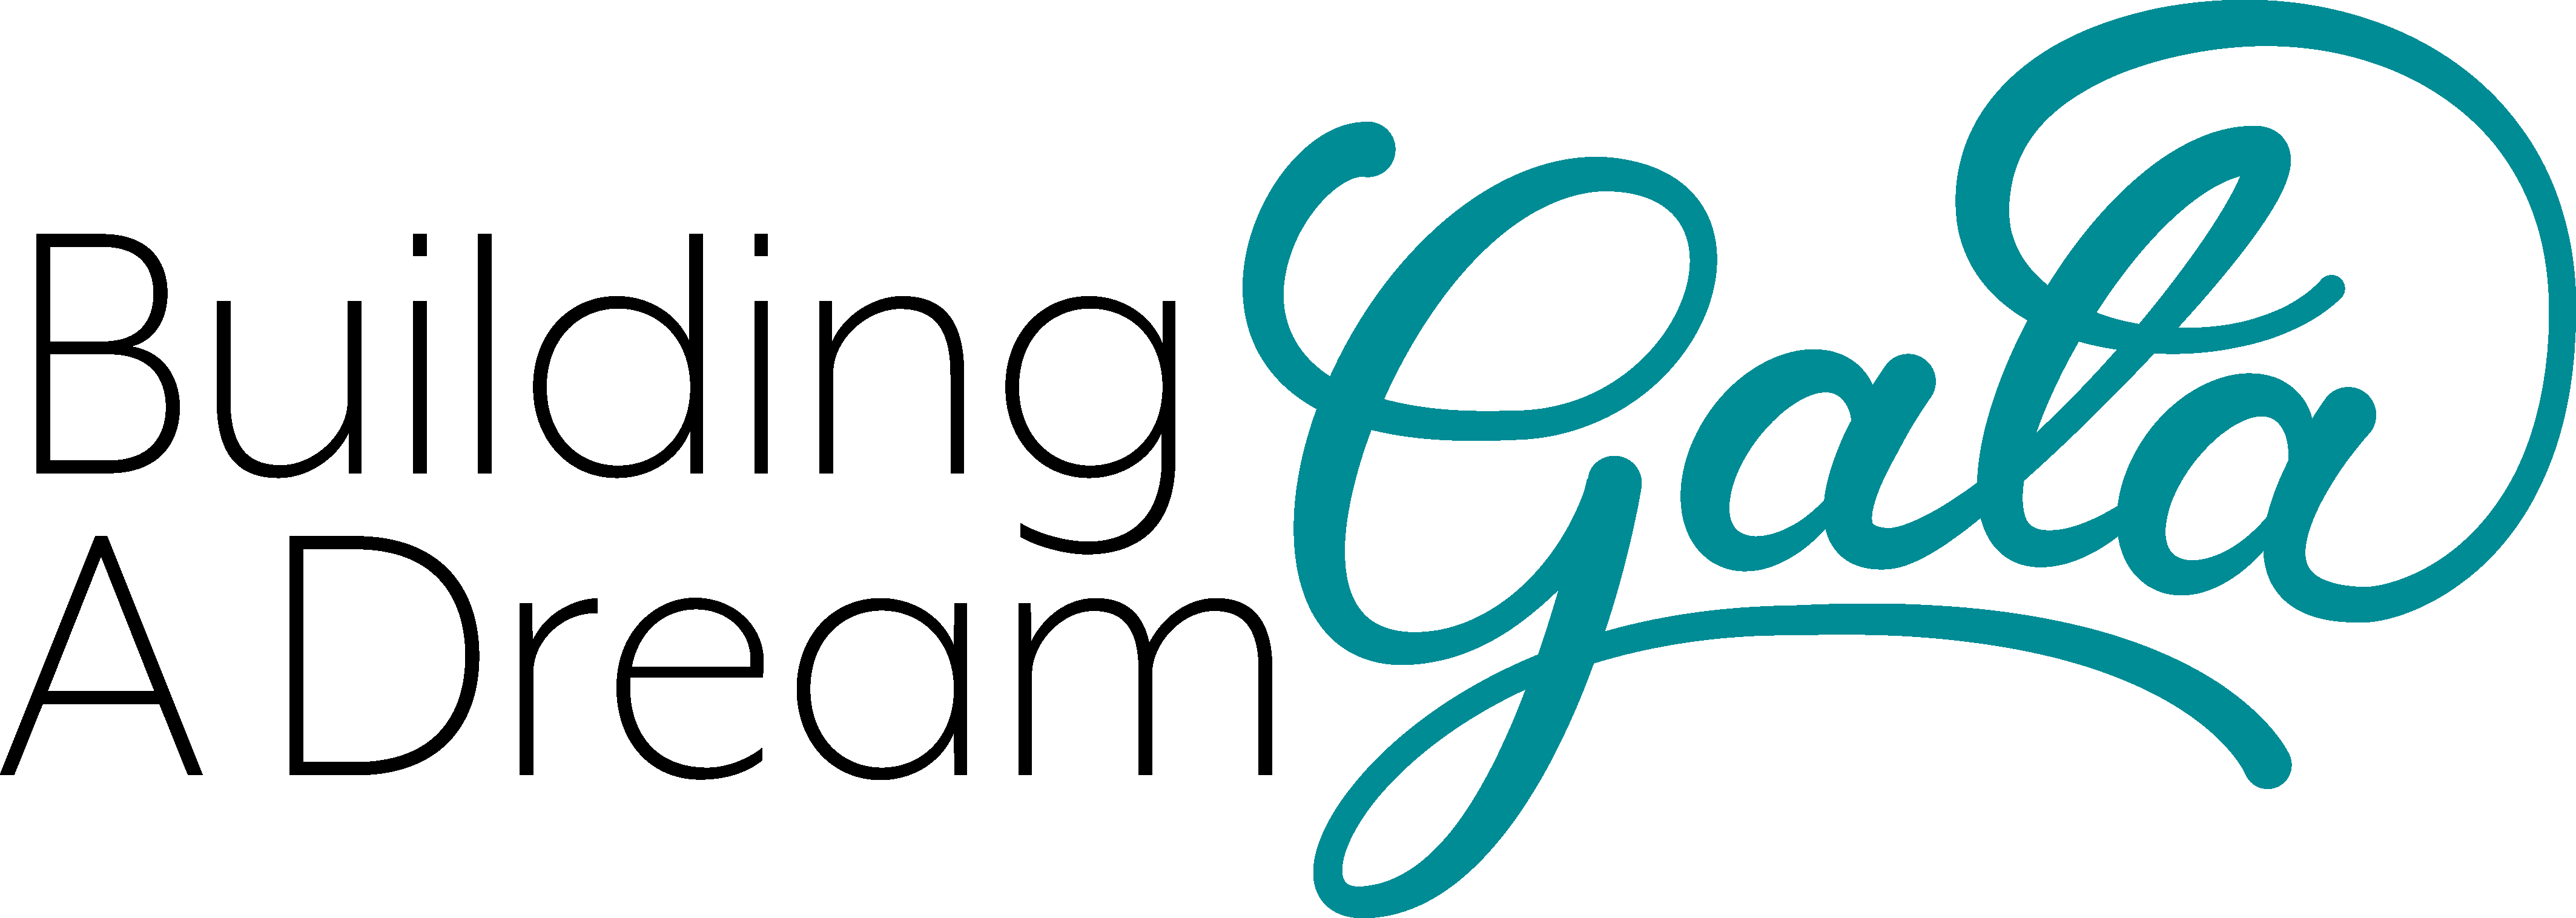 Gala Logo - Building A Dream Gala 2019. Charles River Center